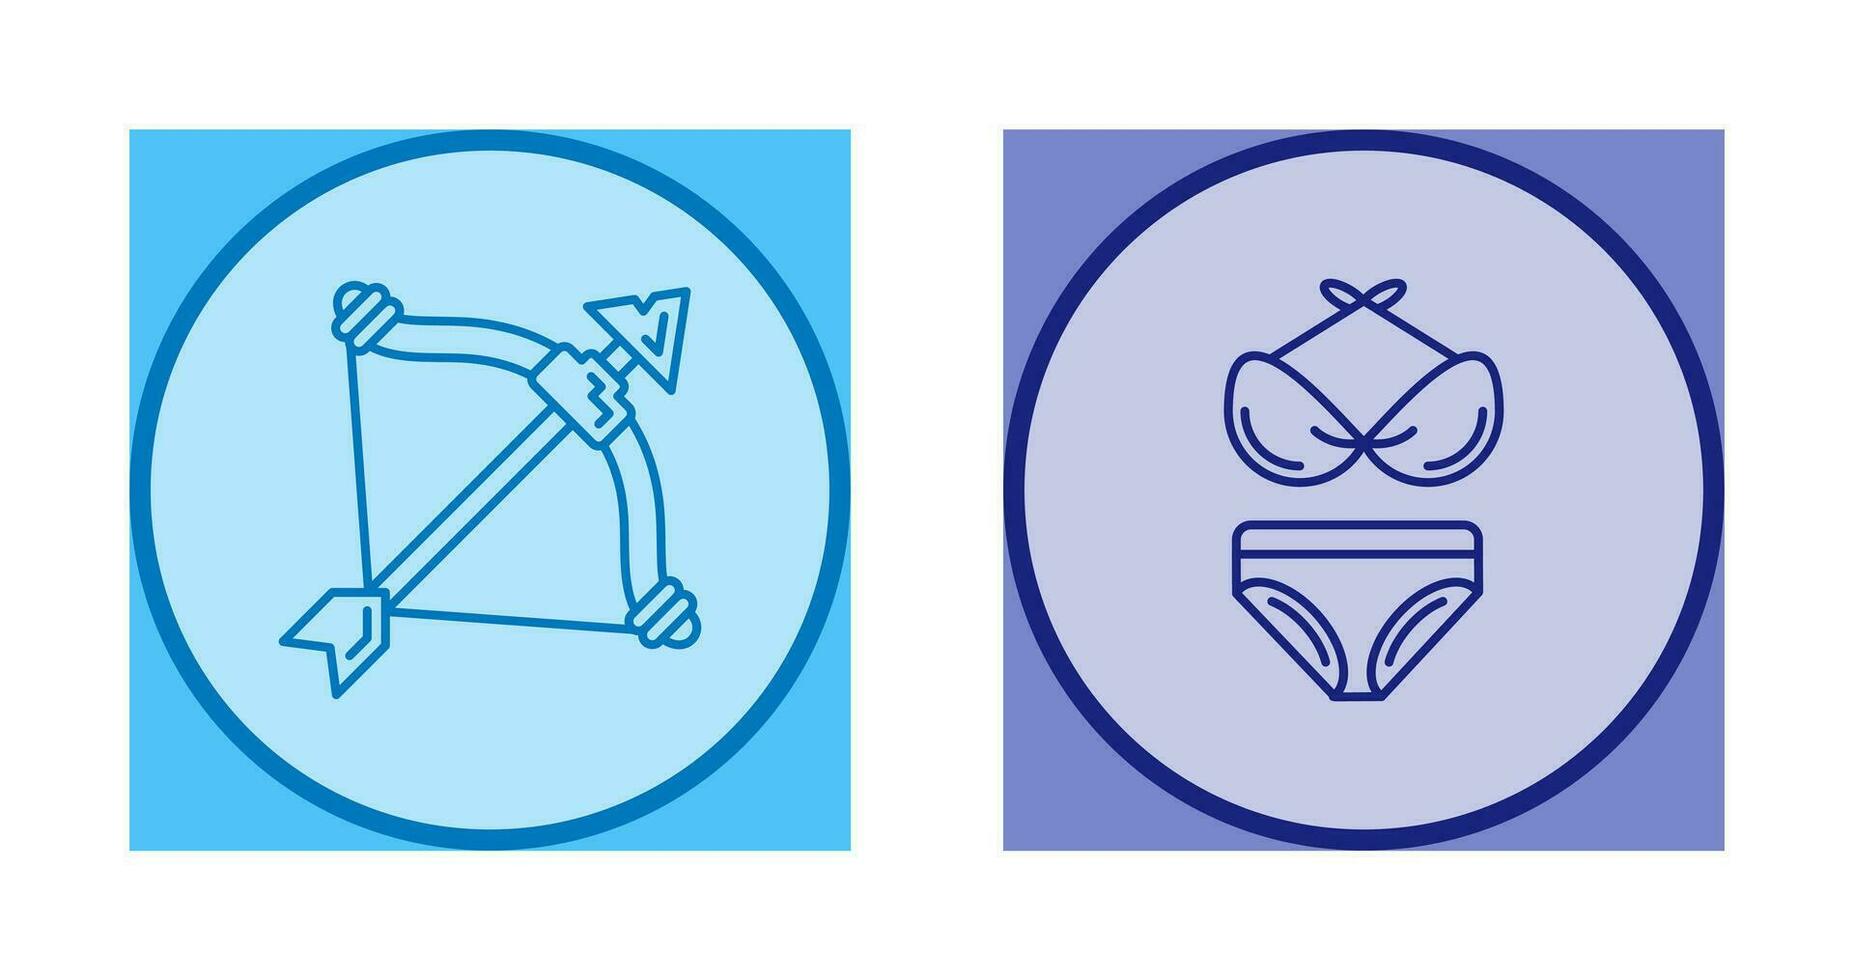 Crossbow and Bikini Icon vector